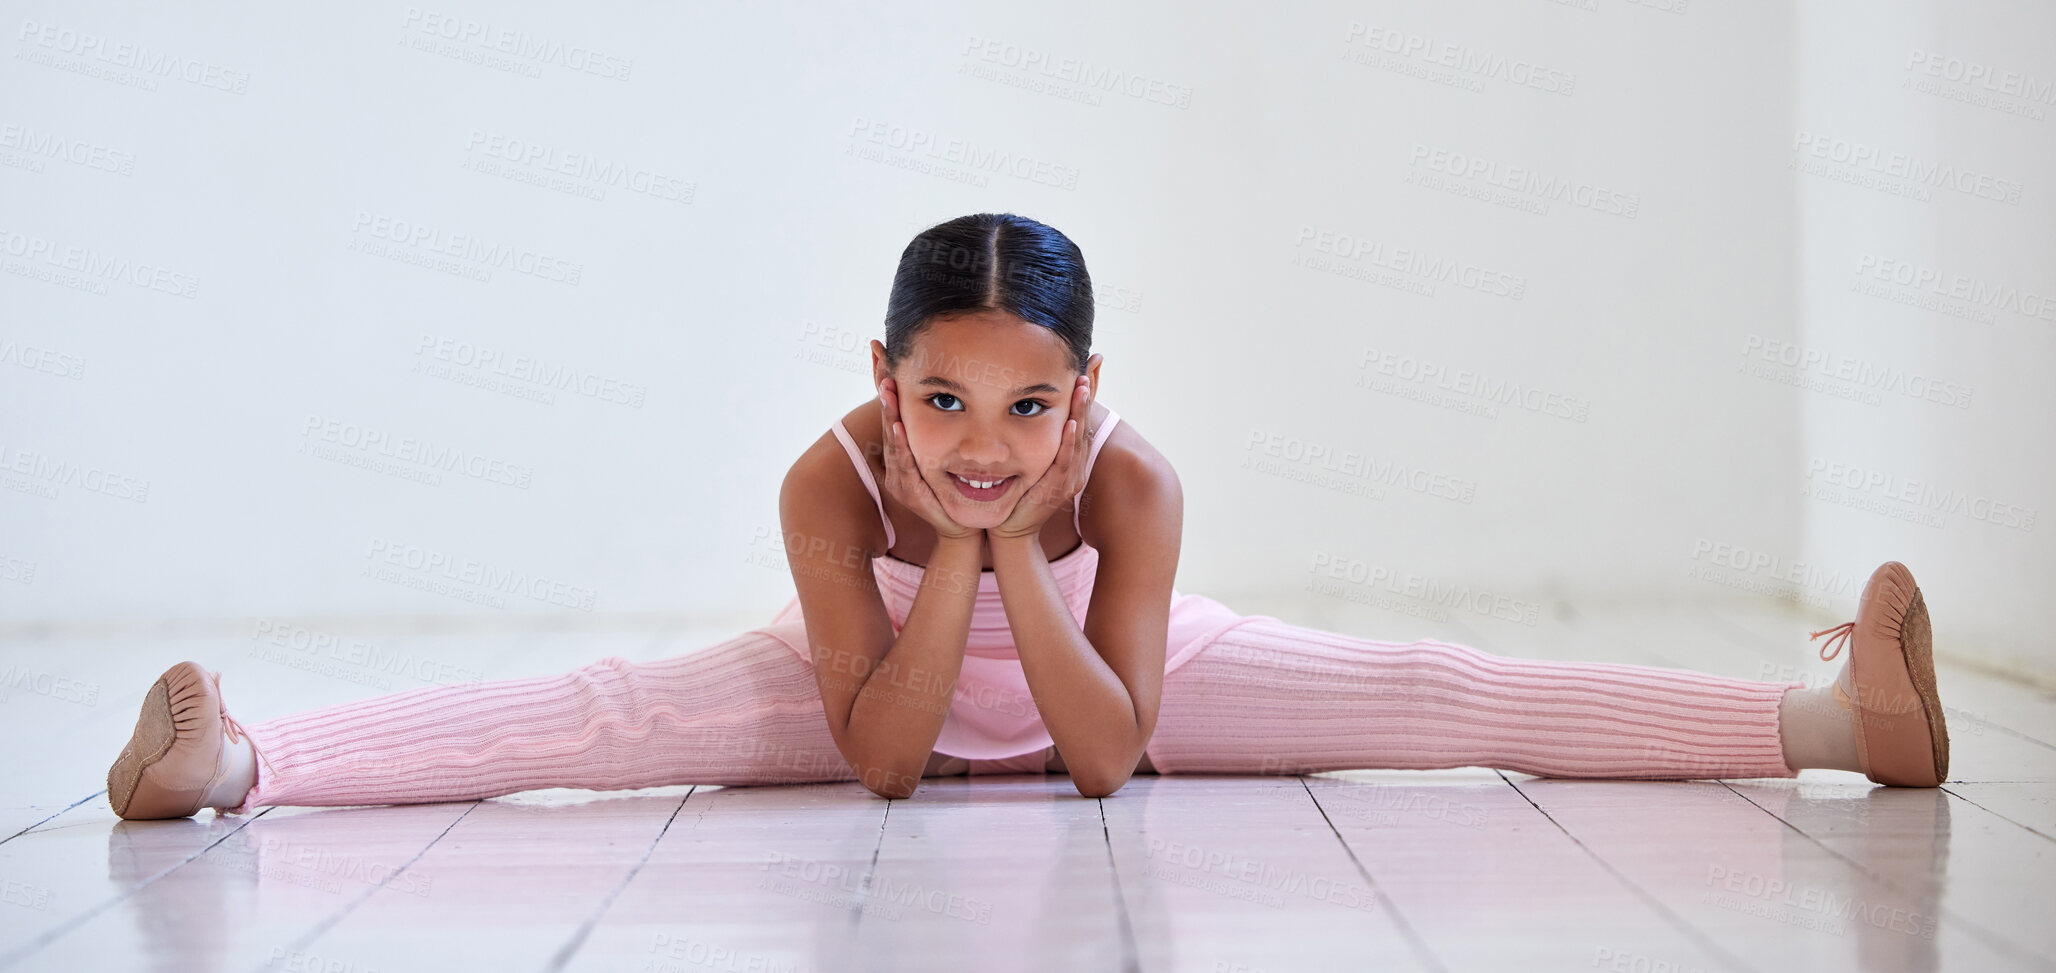 Buy stock photo Portrait of a little girl doing the splits in a ballet studio